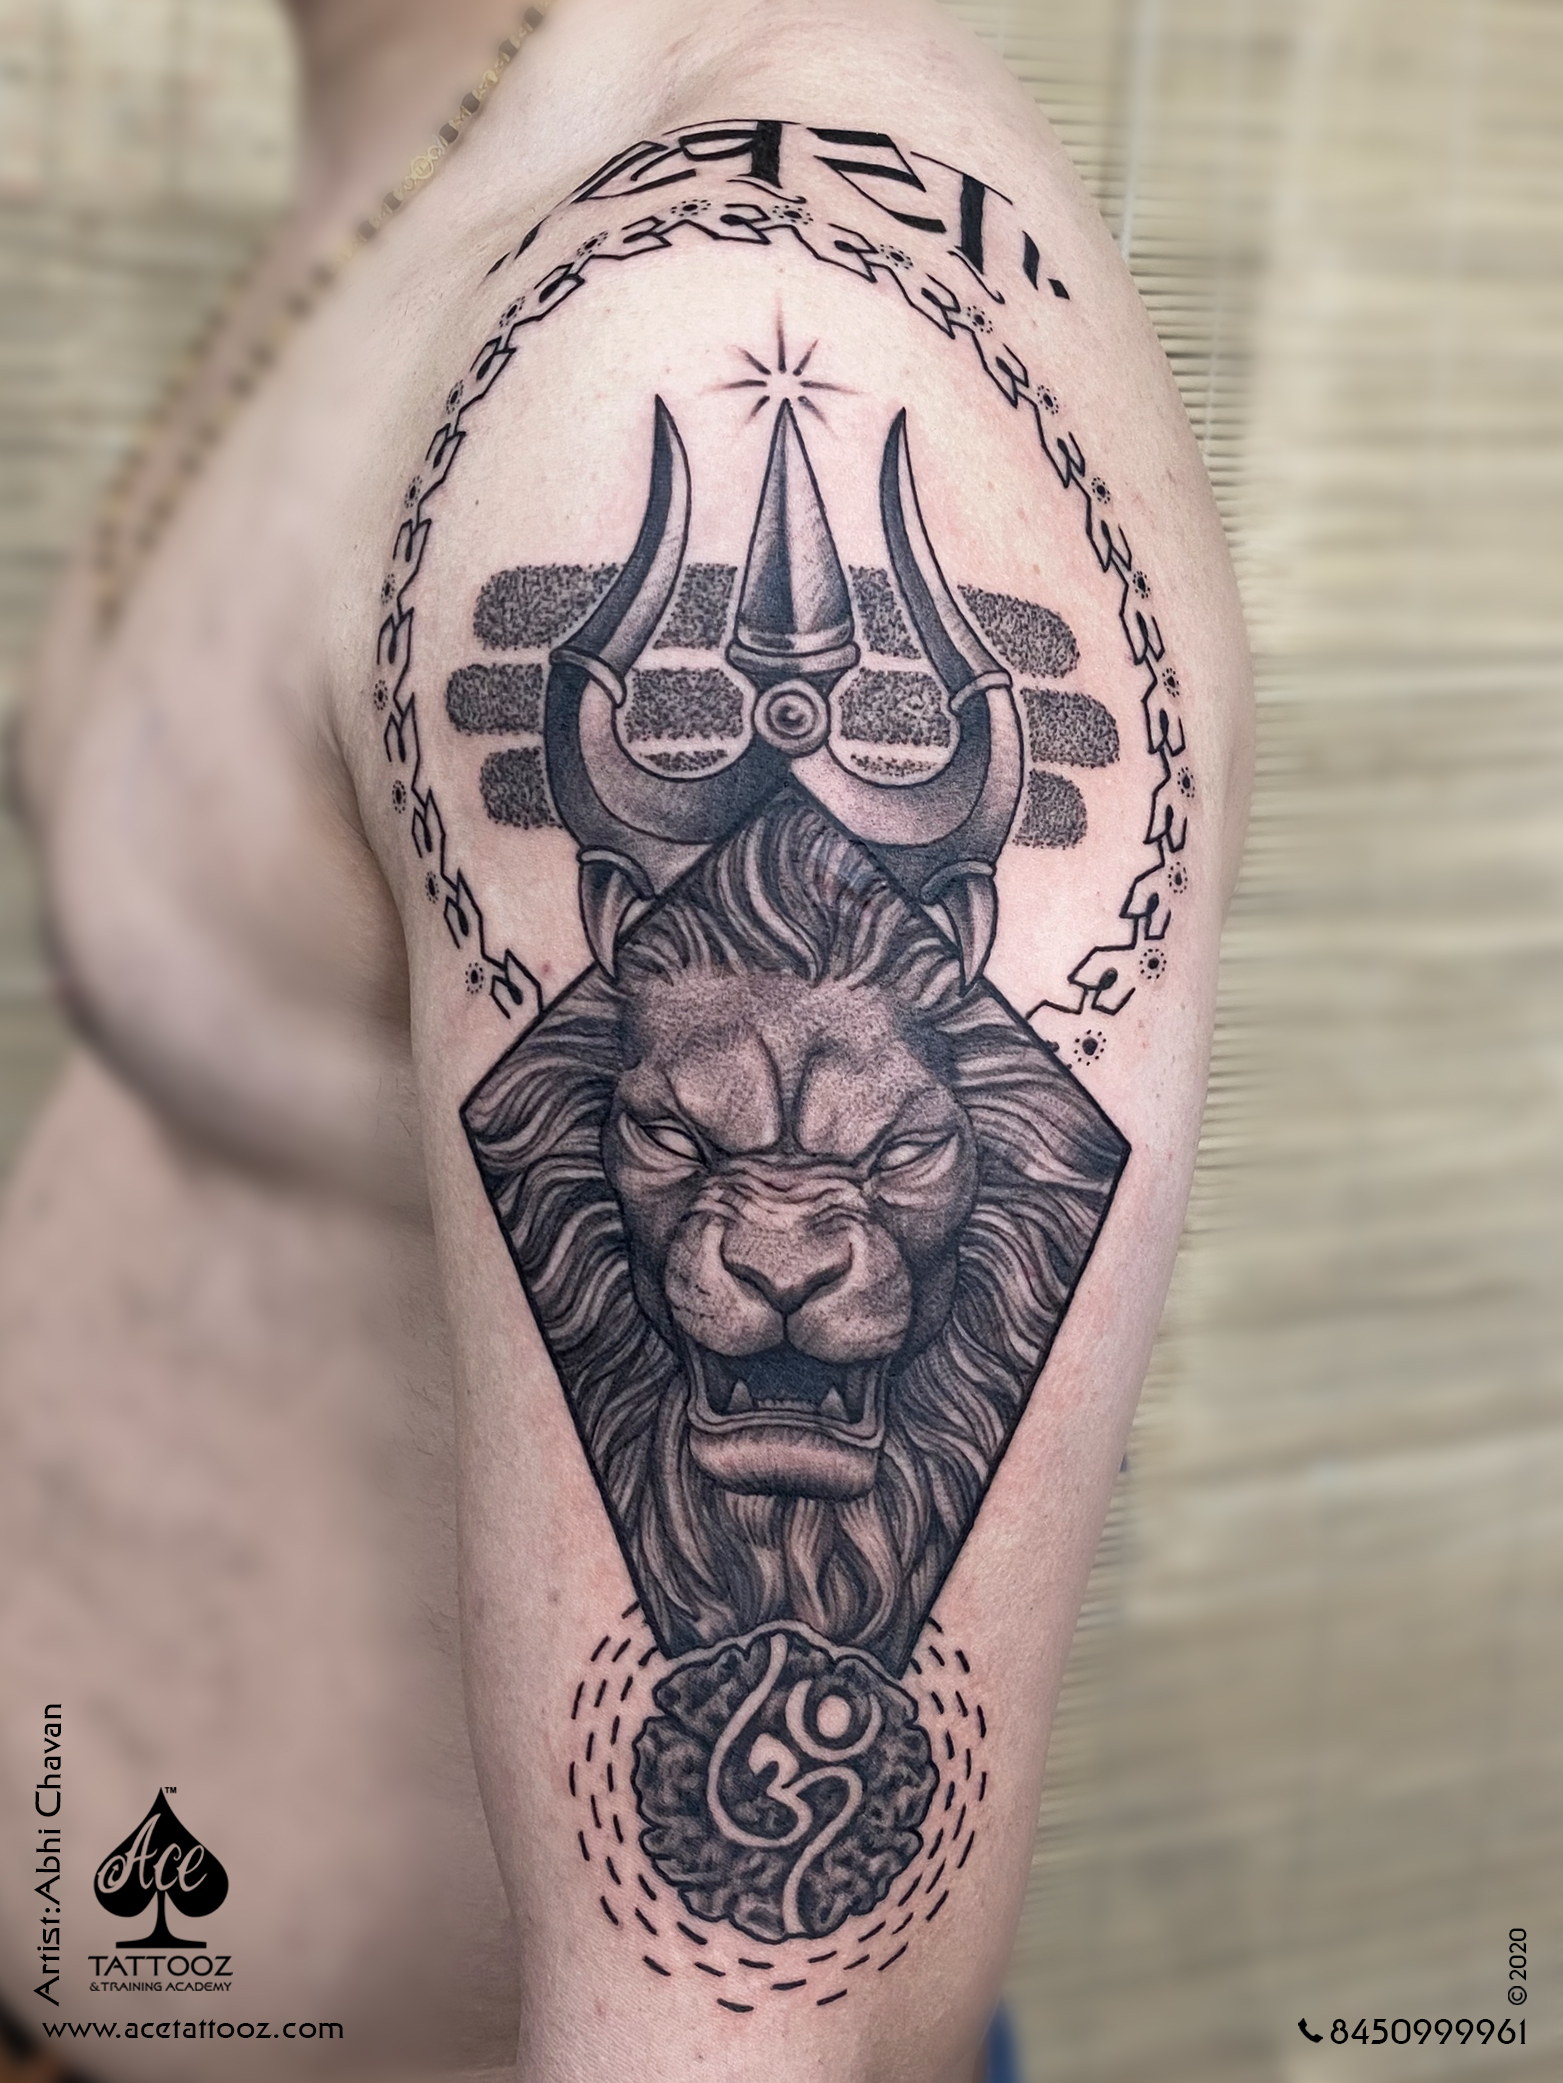 LORD SHIVA HAND TATTOO DESIGNS | Hand tattoos, Tattoos, Tattoo designs